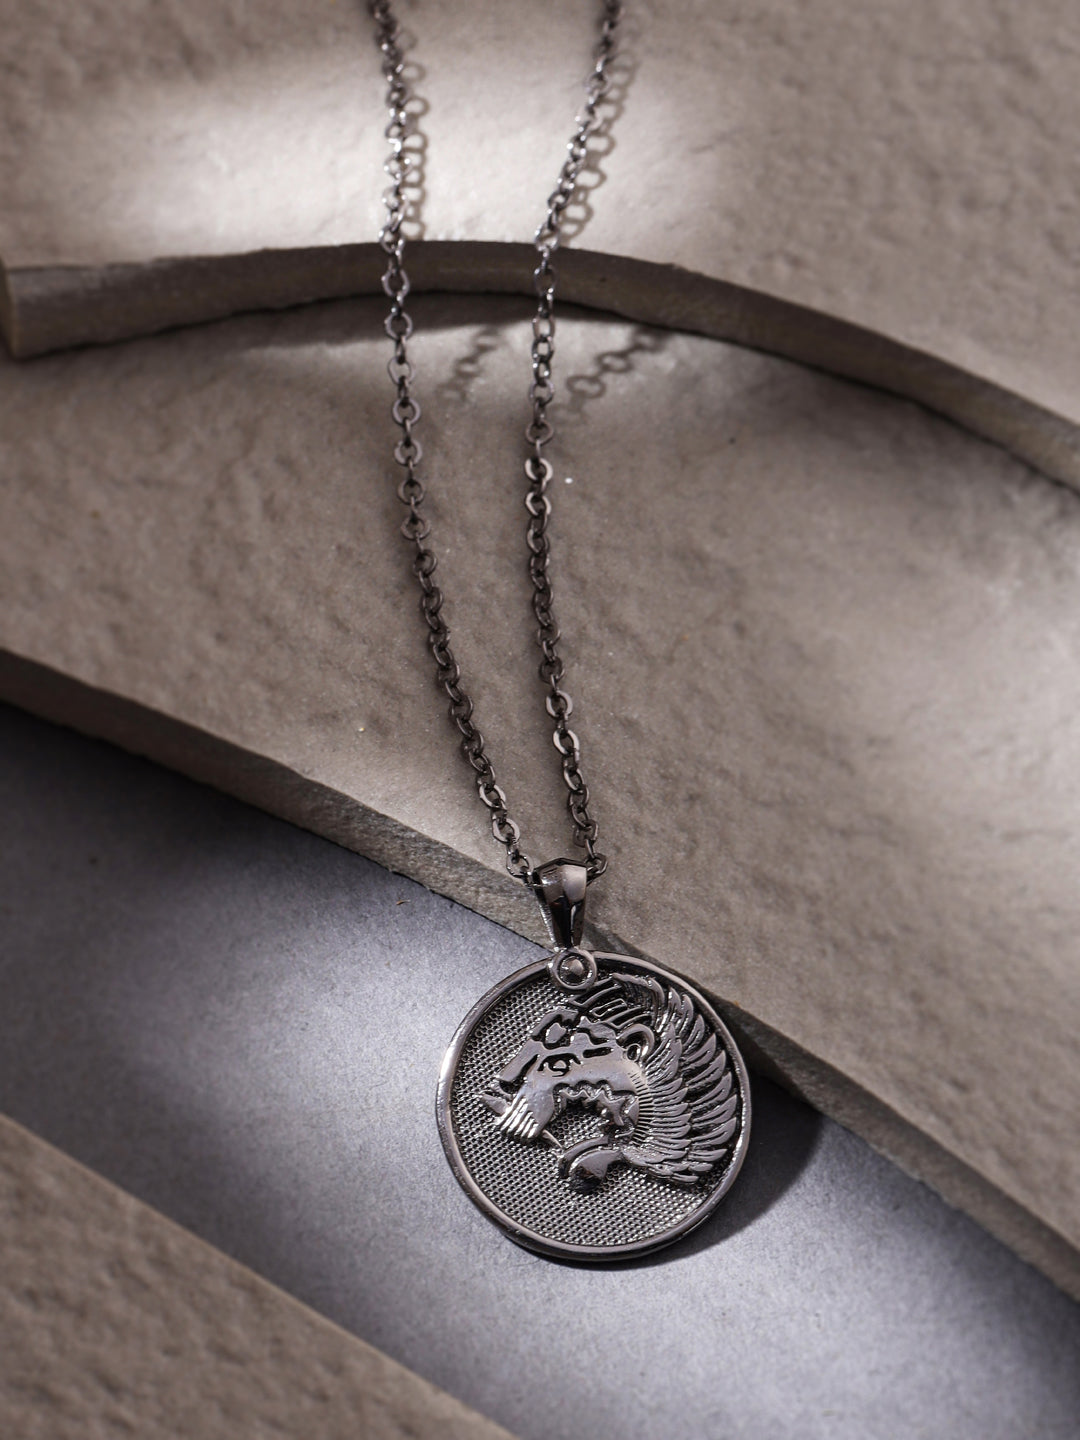 Regulus: The Obsidian Monarch pendant chain